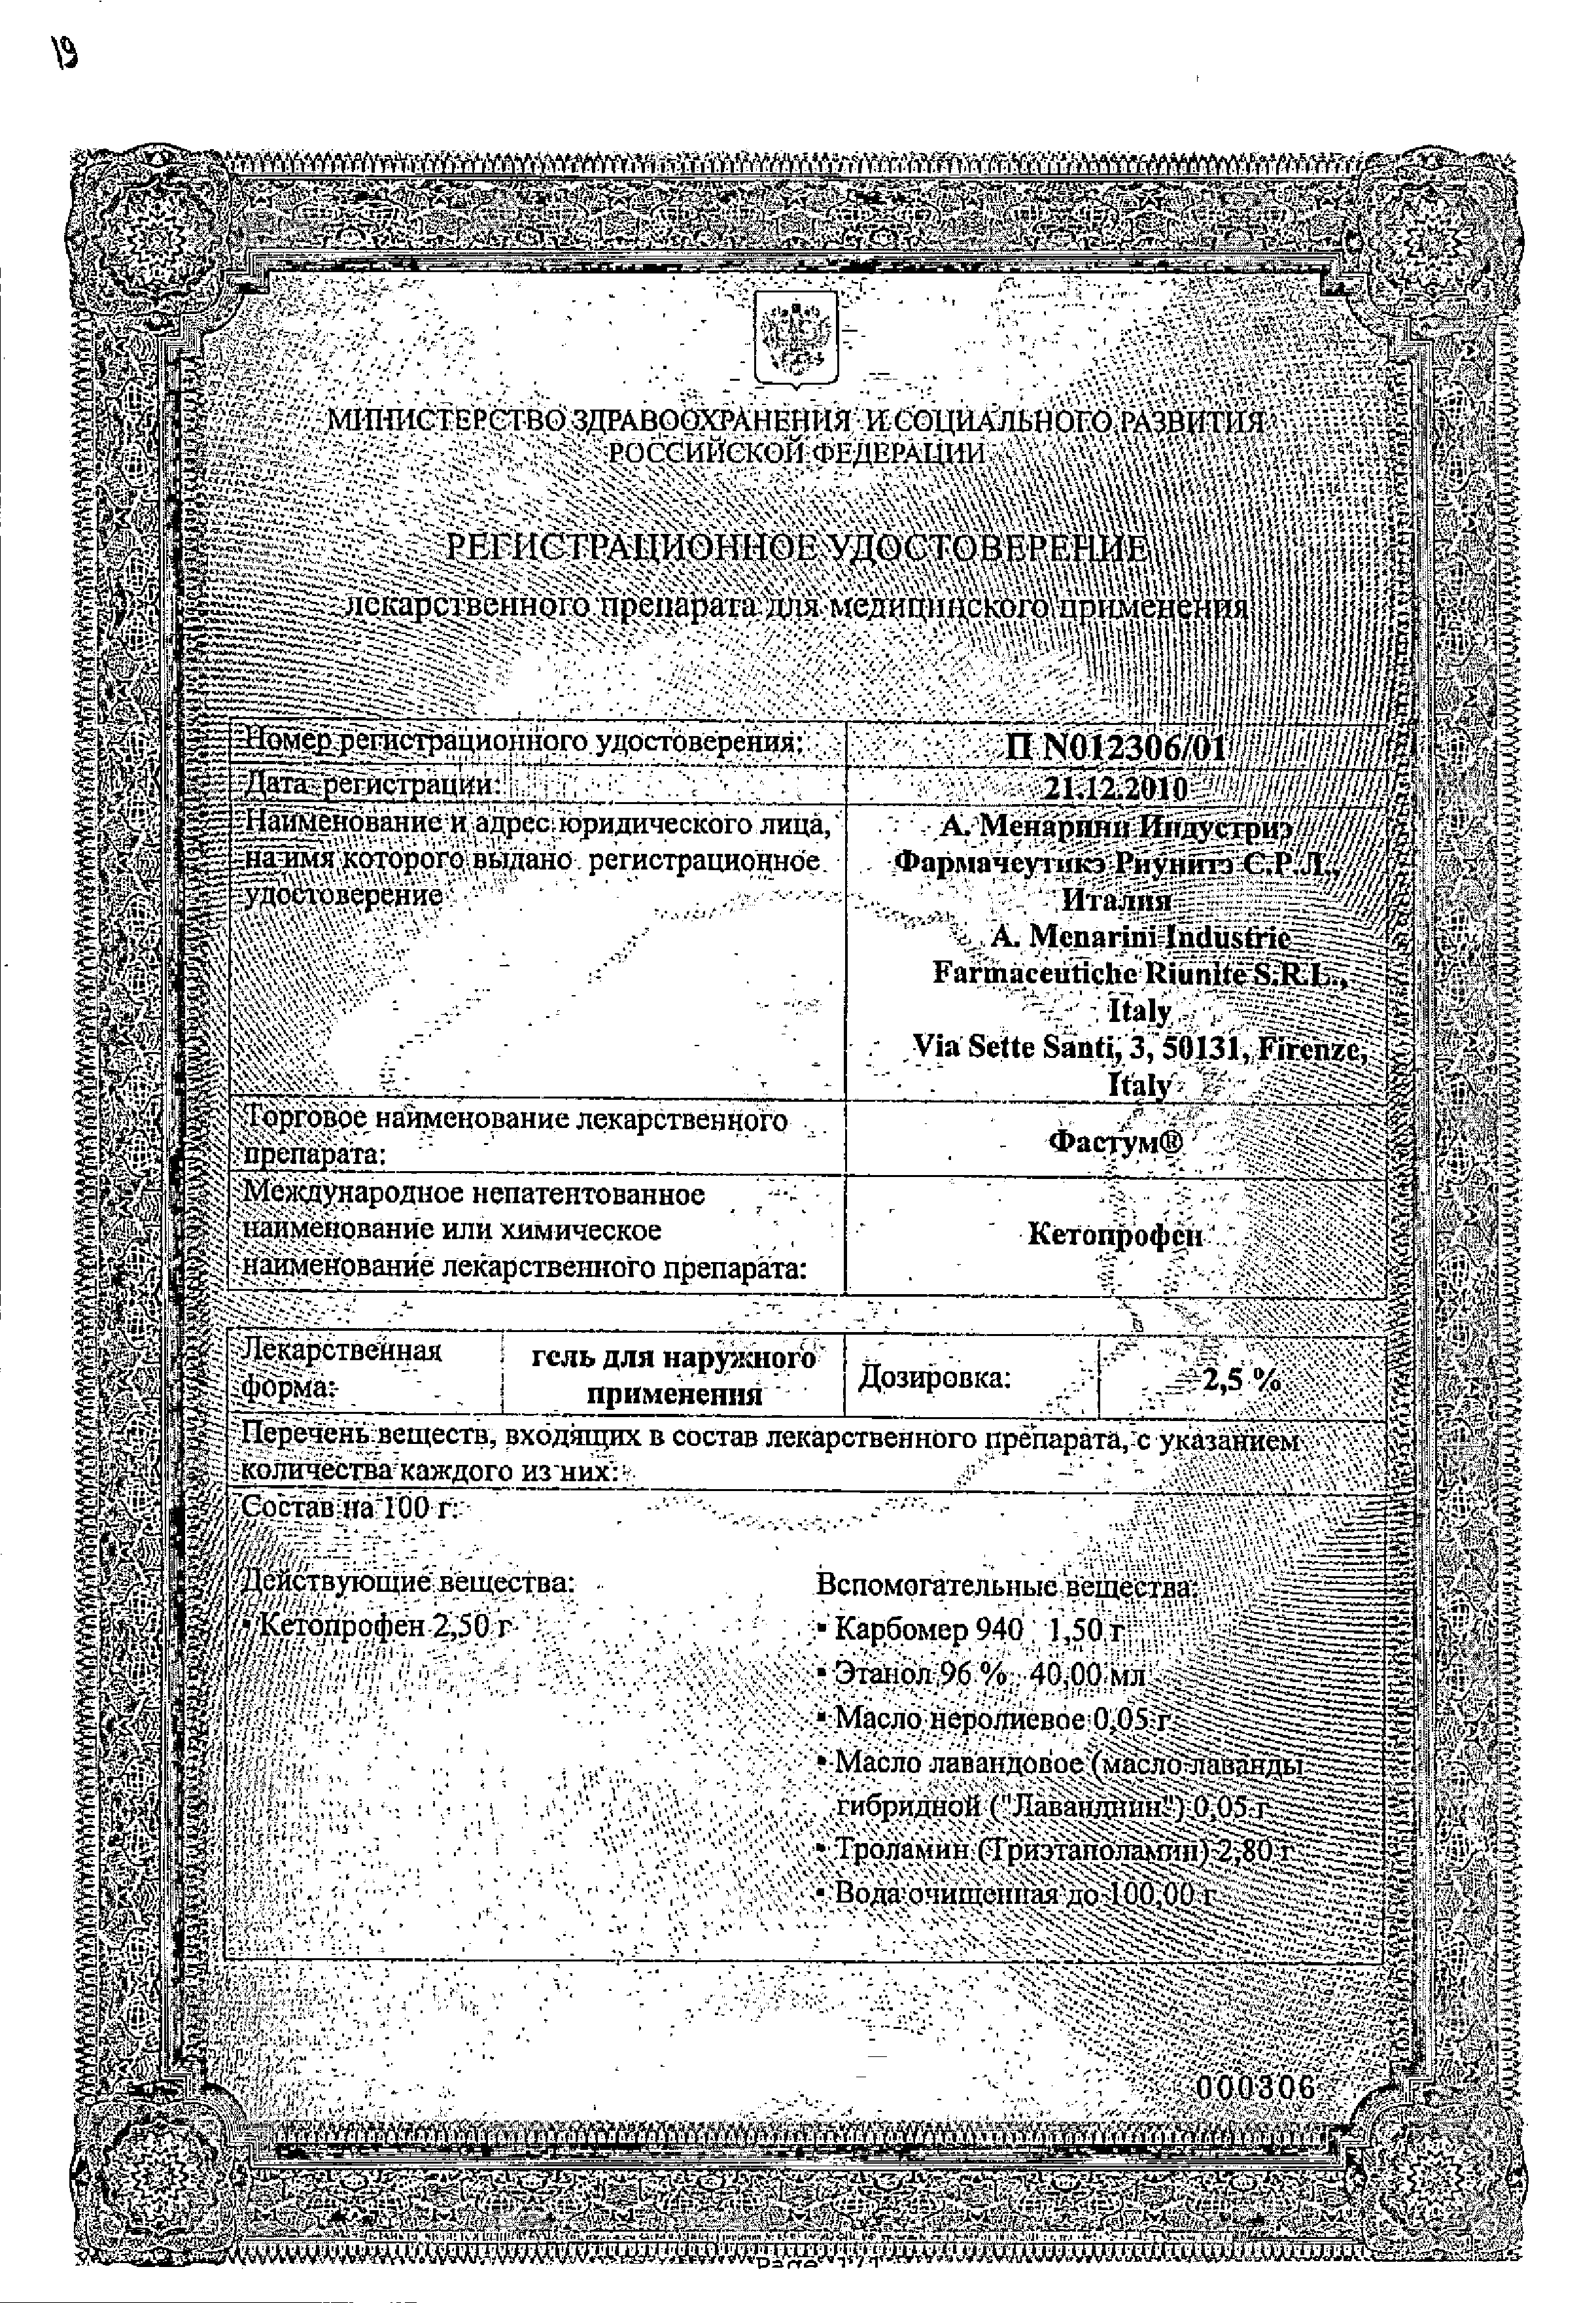 Фастум сертификат